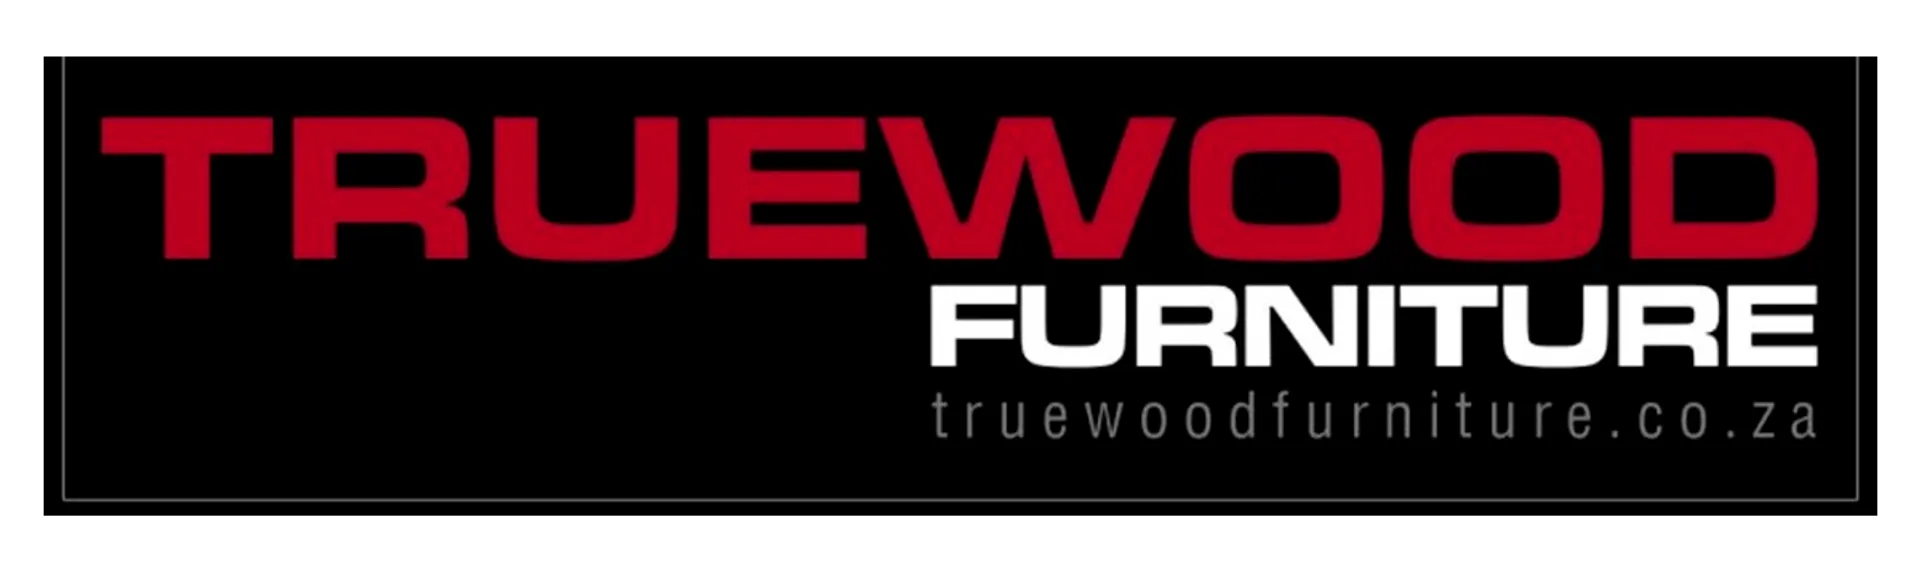 TRUE WOOD FURNITURE logo. Current catalogue